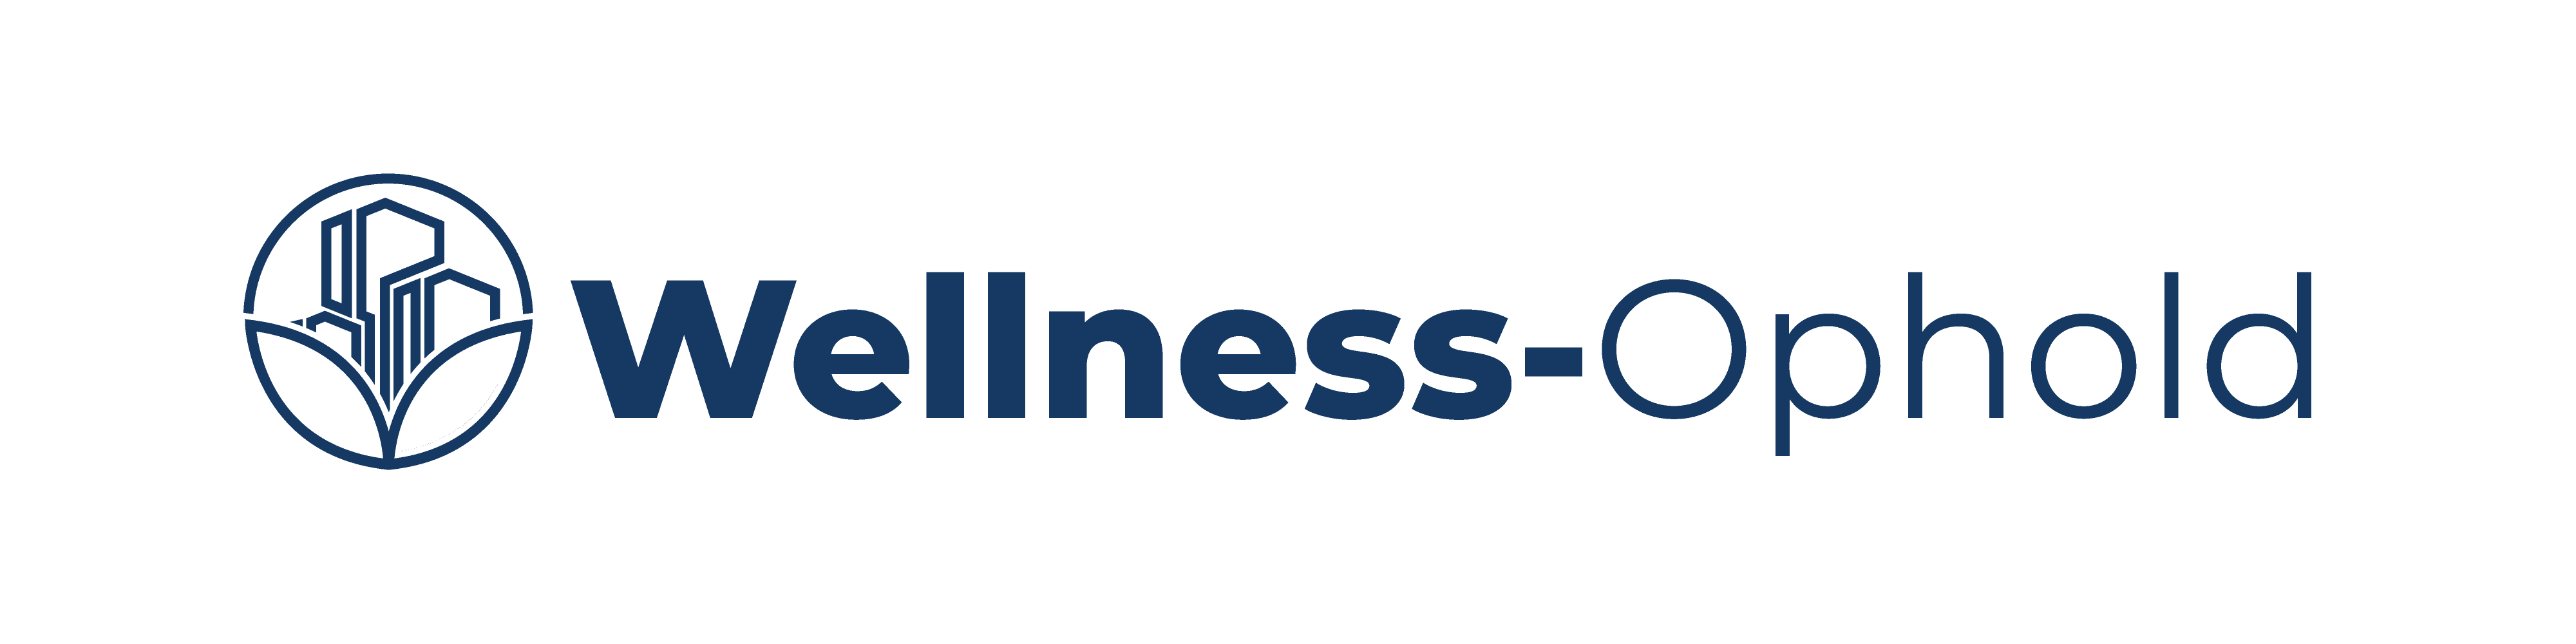 Wellness ophold logo